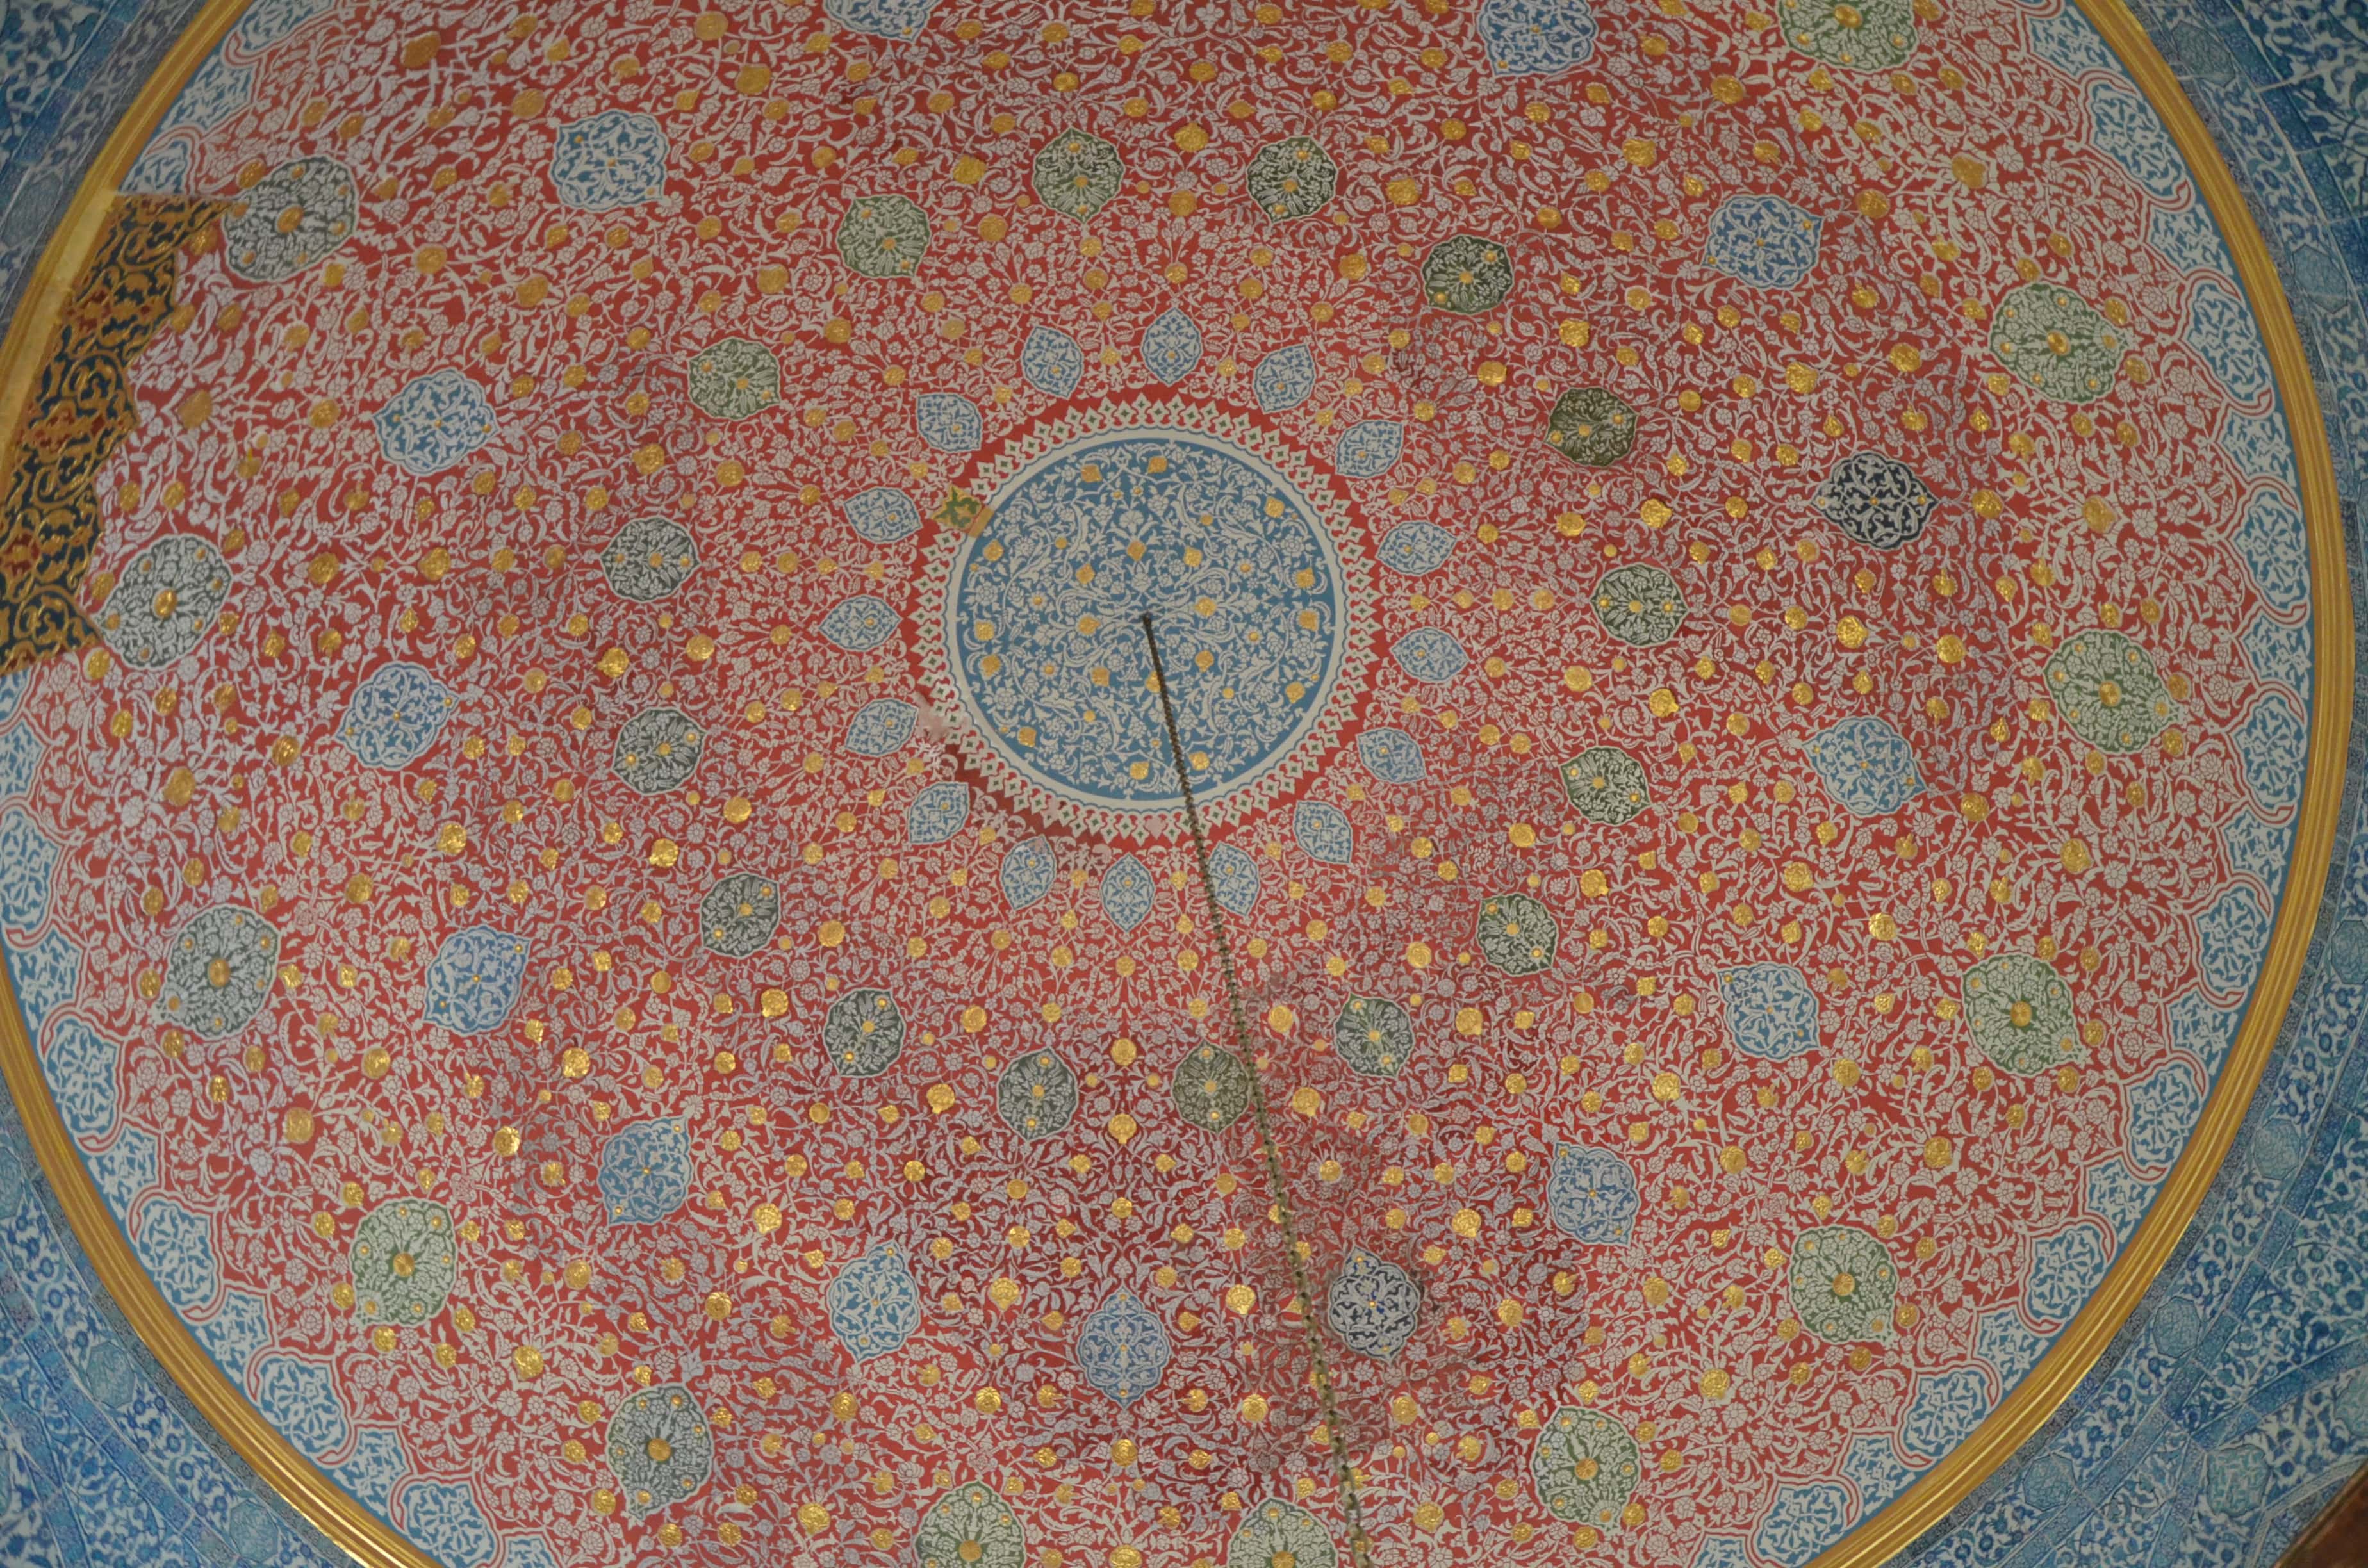 Dome of Baghdad Pavilion